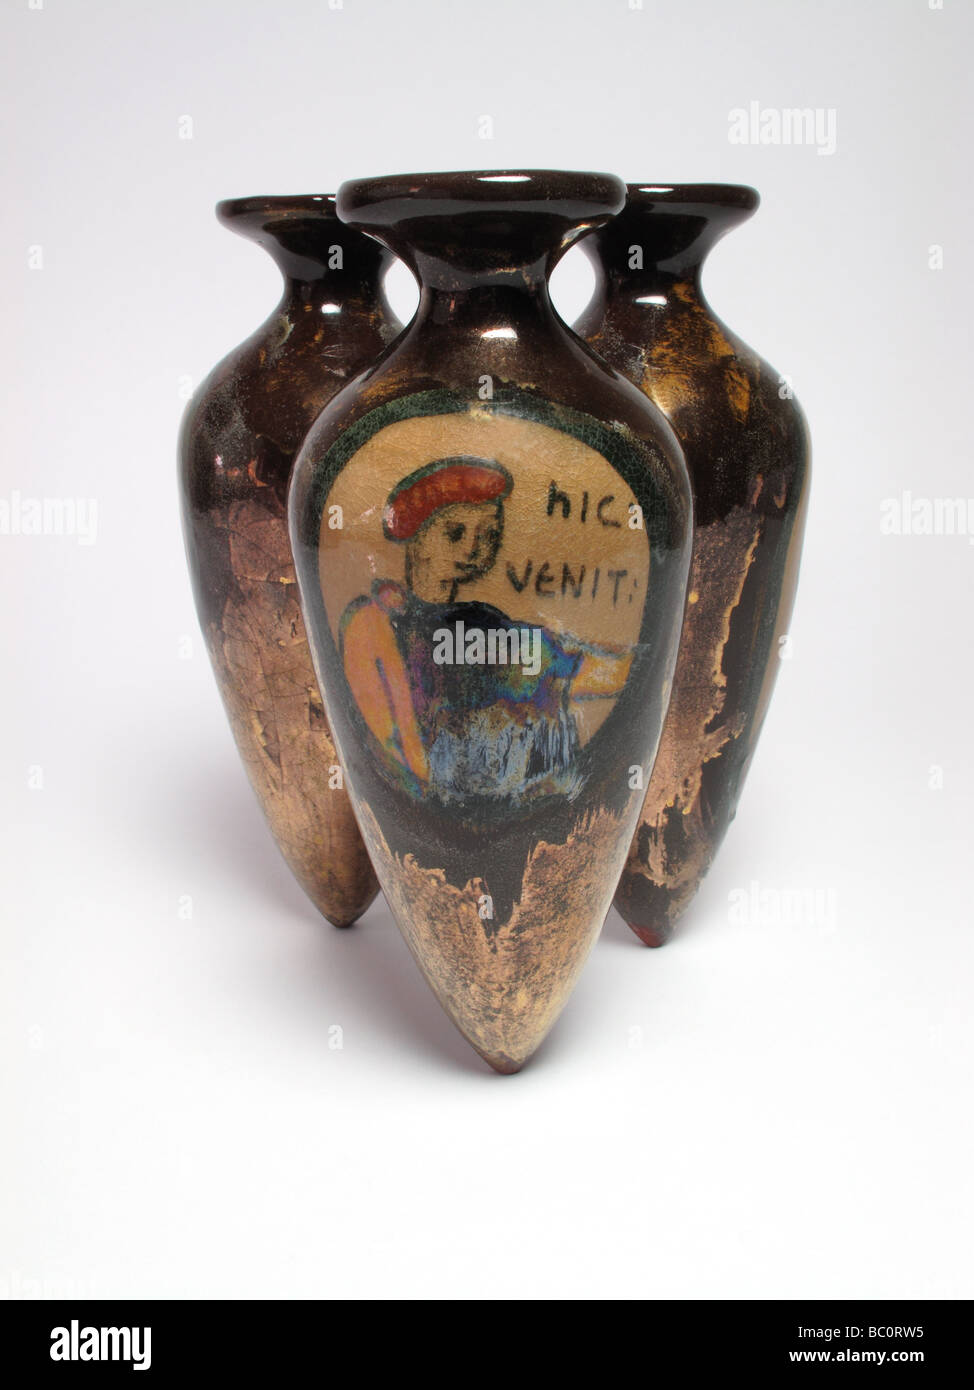 Art nouveau pottery vase circa hi-res stock photography and images - Alamy